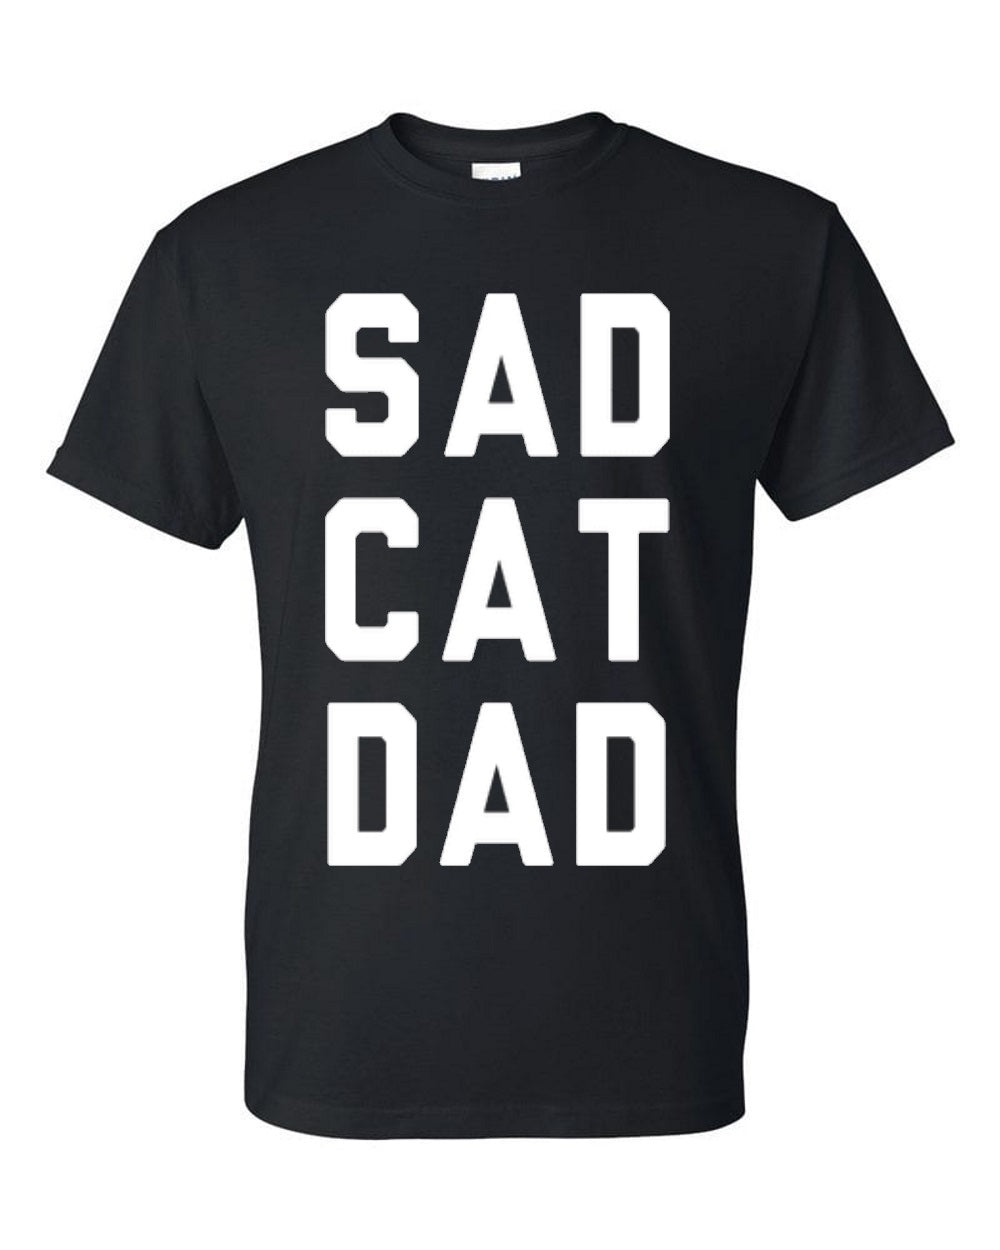 Sad cat dad Men's classic cotton t-shirt - Premium t-shirt from MyDesigns - Just $19.95! Shop now at Lees Krazy Teez